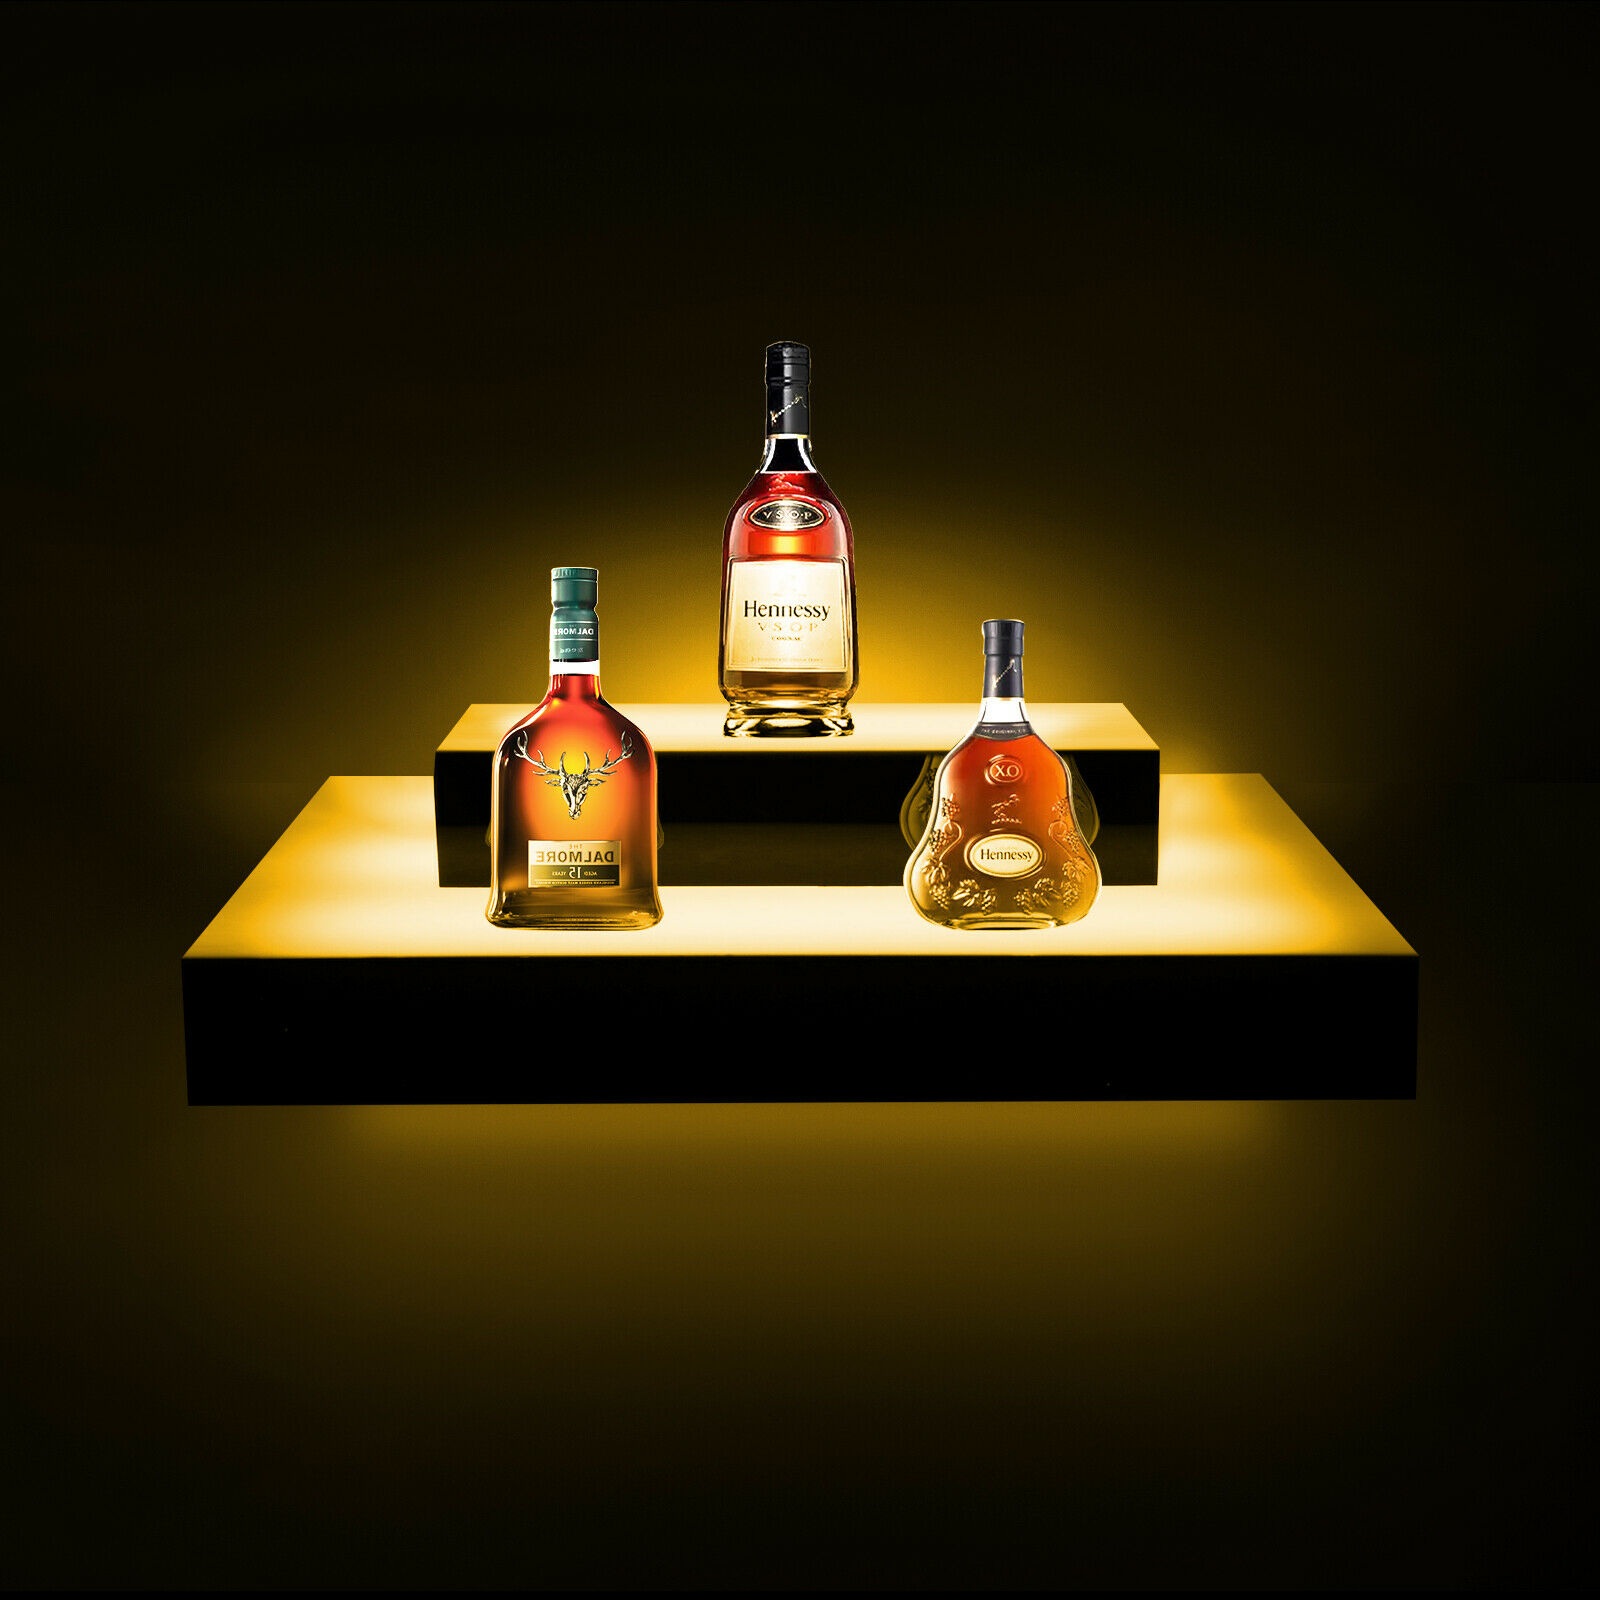 LED Lighted Up Glowing Liquor Bottle Shelf Shelving Décor Display Rack Home bar